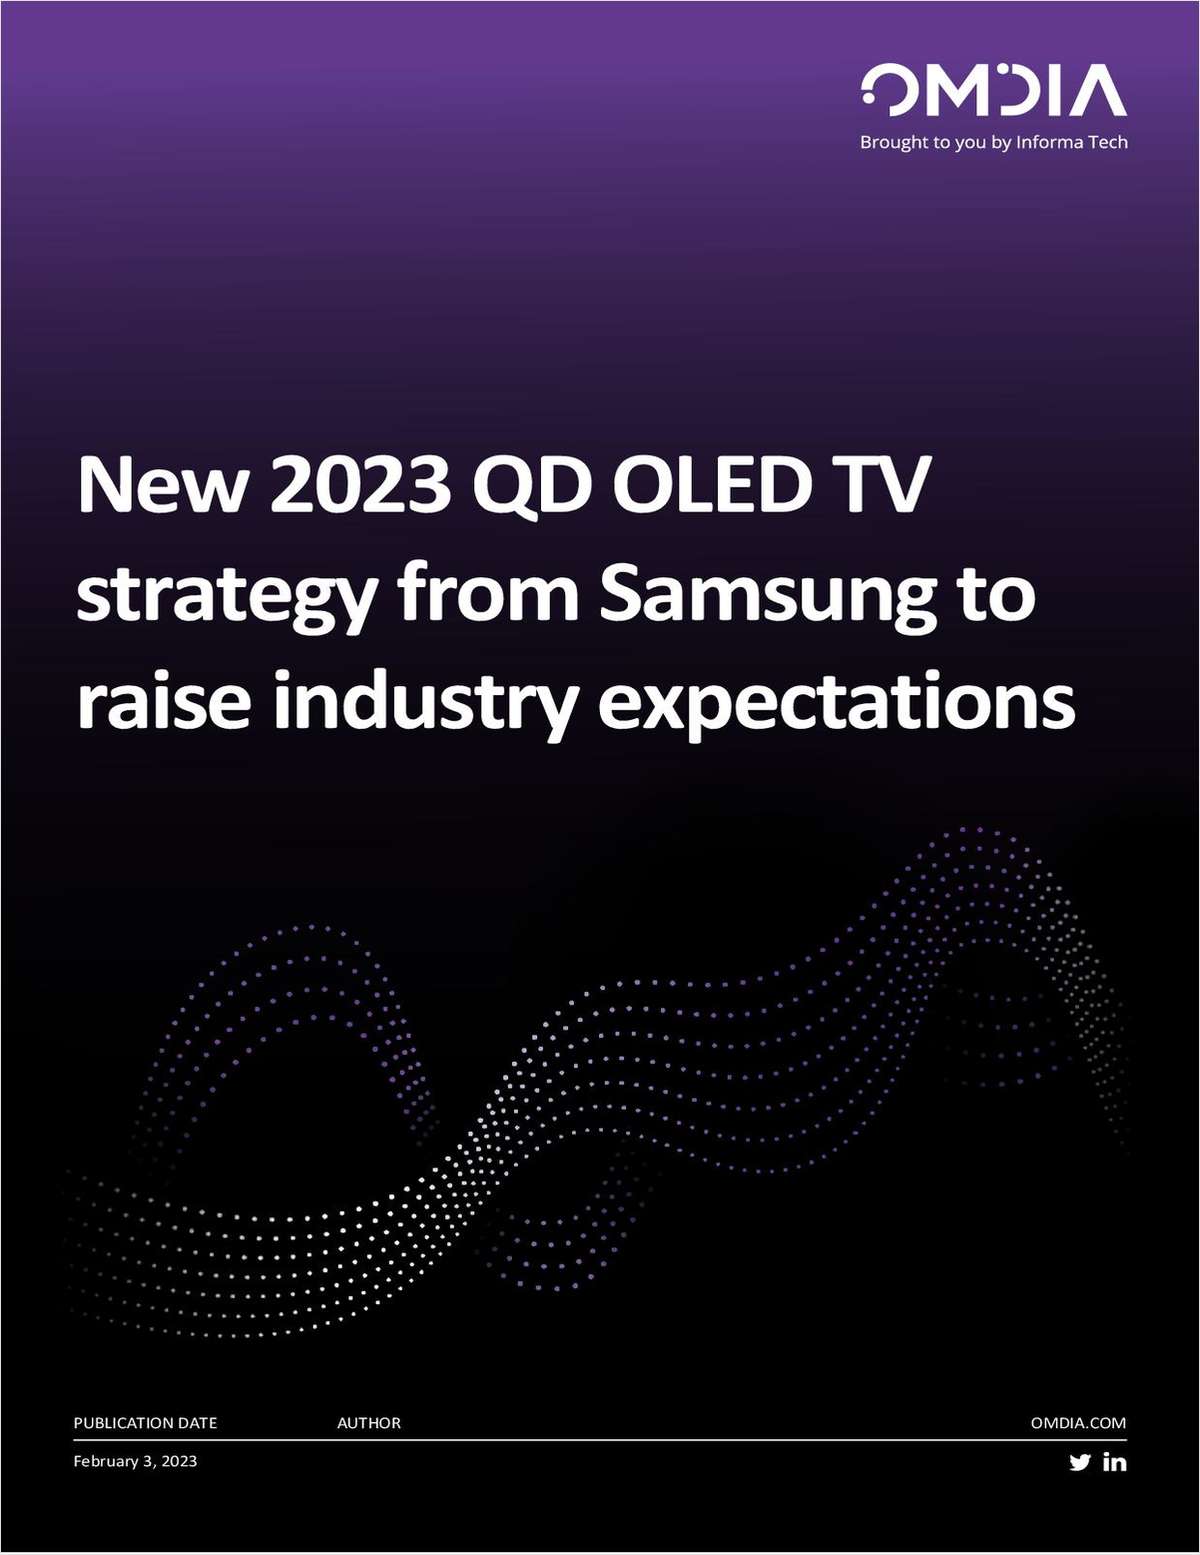 Samsung's new 2023 QD OLED TV strategy